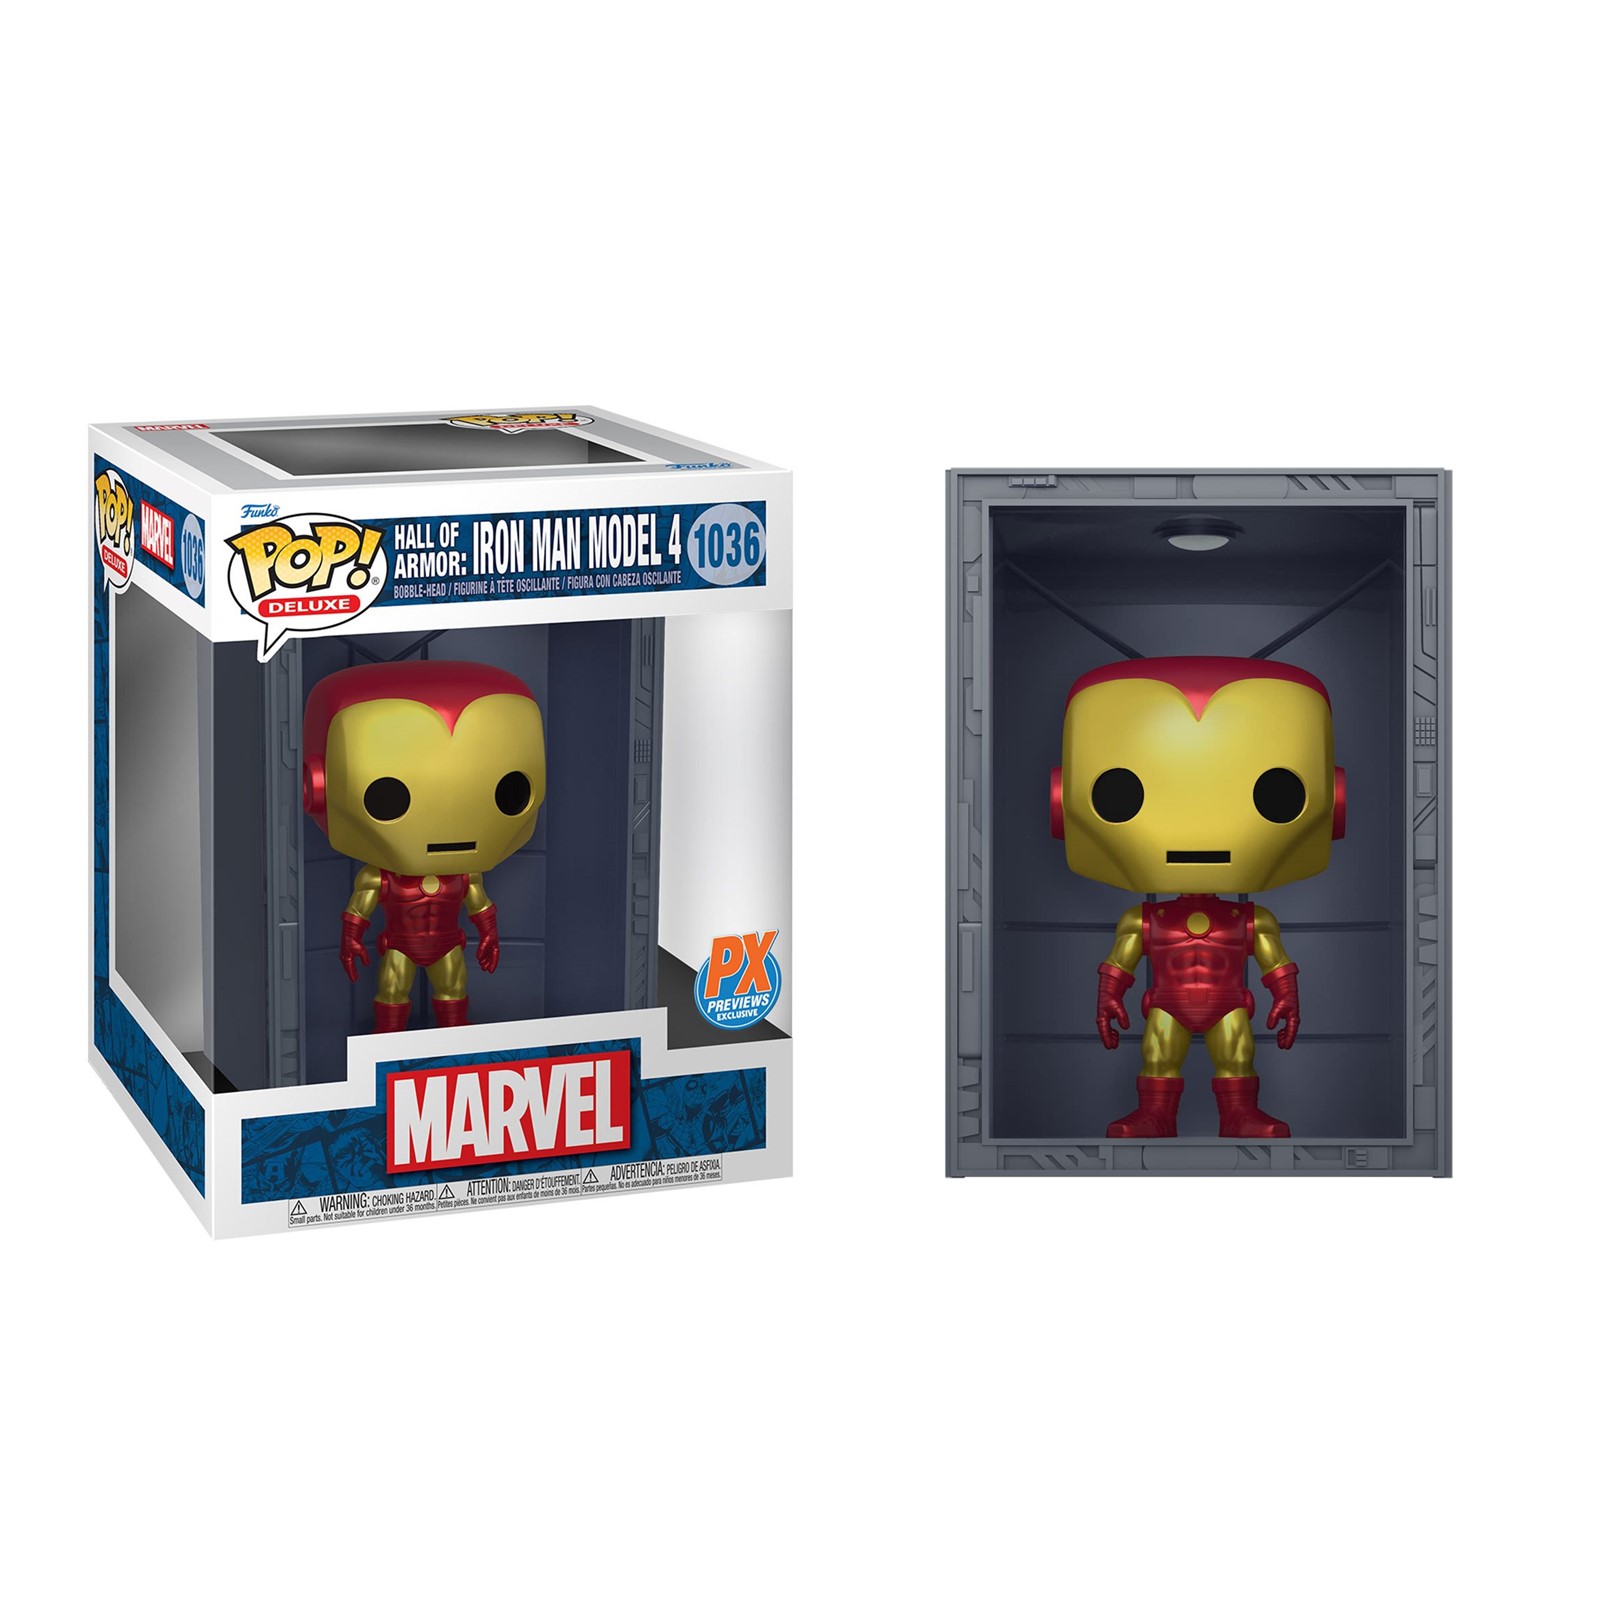 Funko Pop Marvel Iron Man Hall of Armor Model 8 - 1038